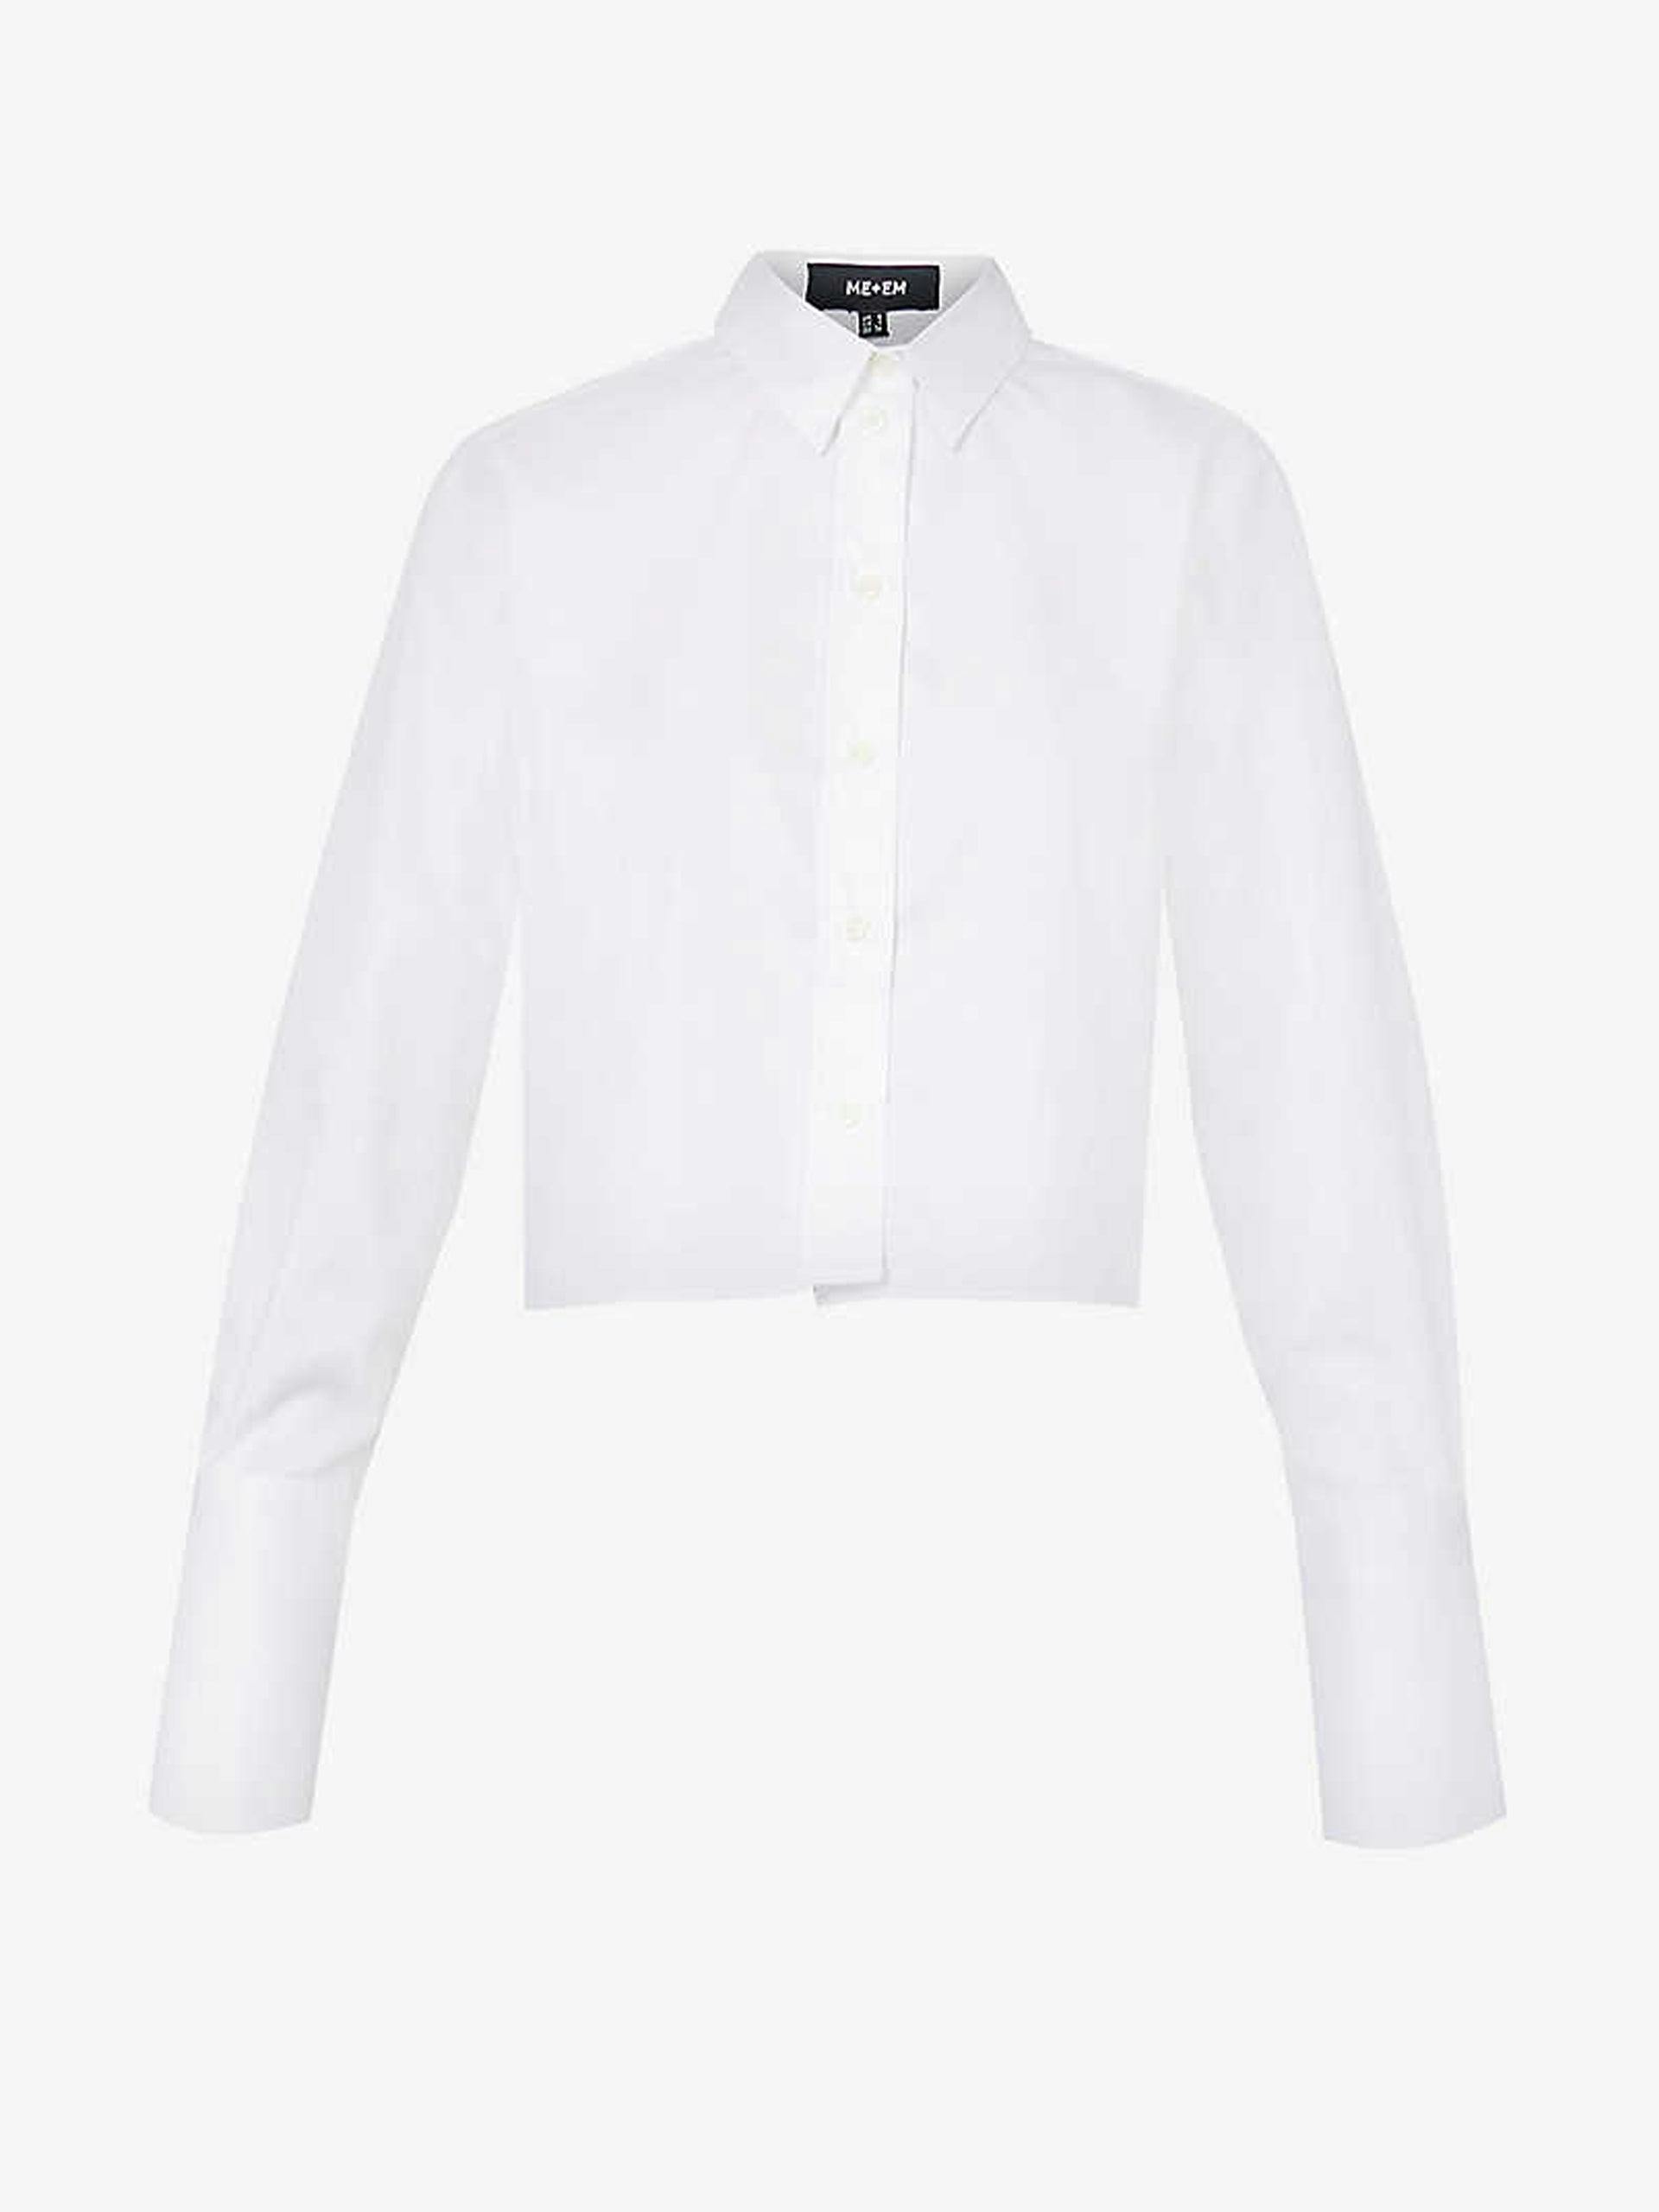 White cotton cropped shirt